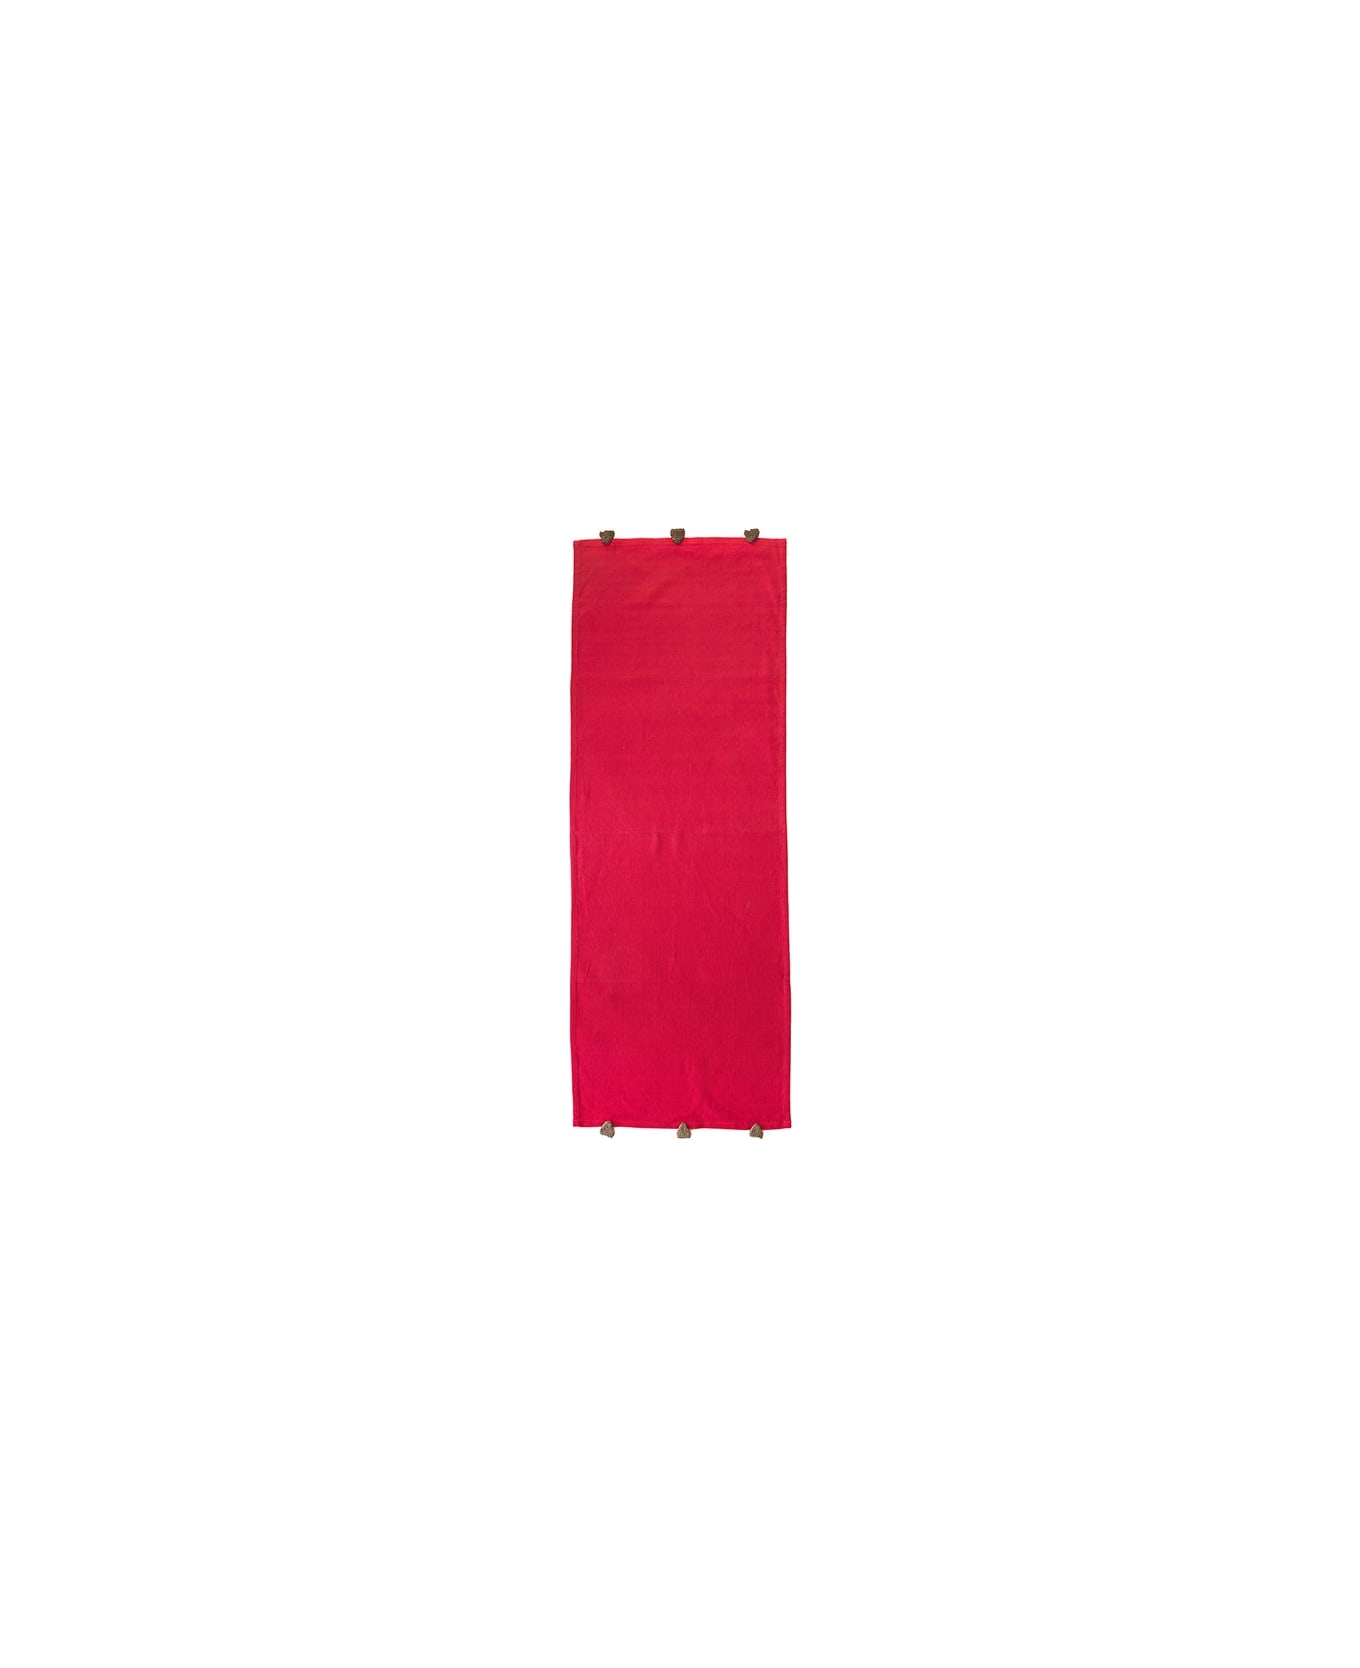 Le Botteghe su Gologone Runner Crochet 130x50 Cm - Red